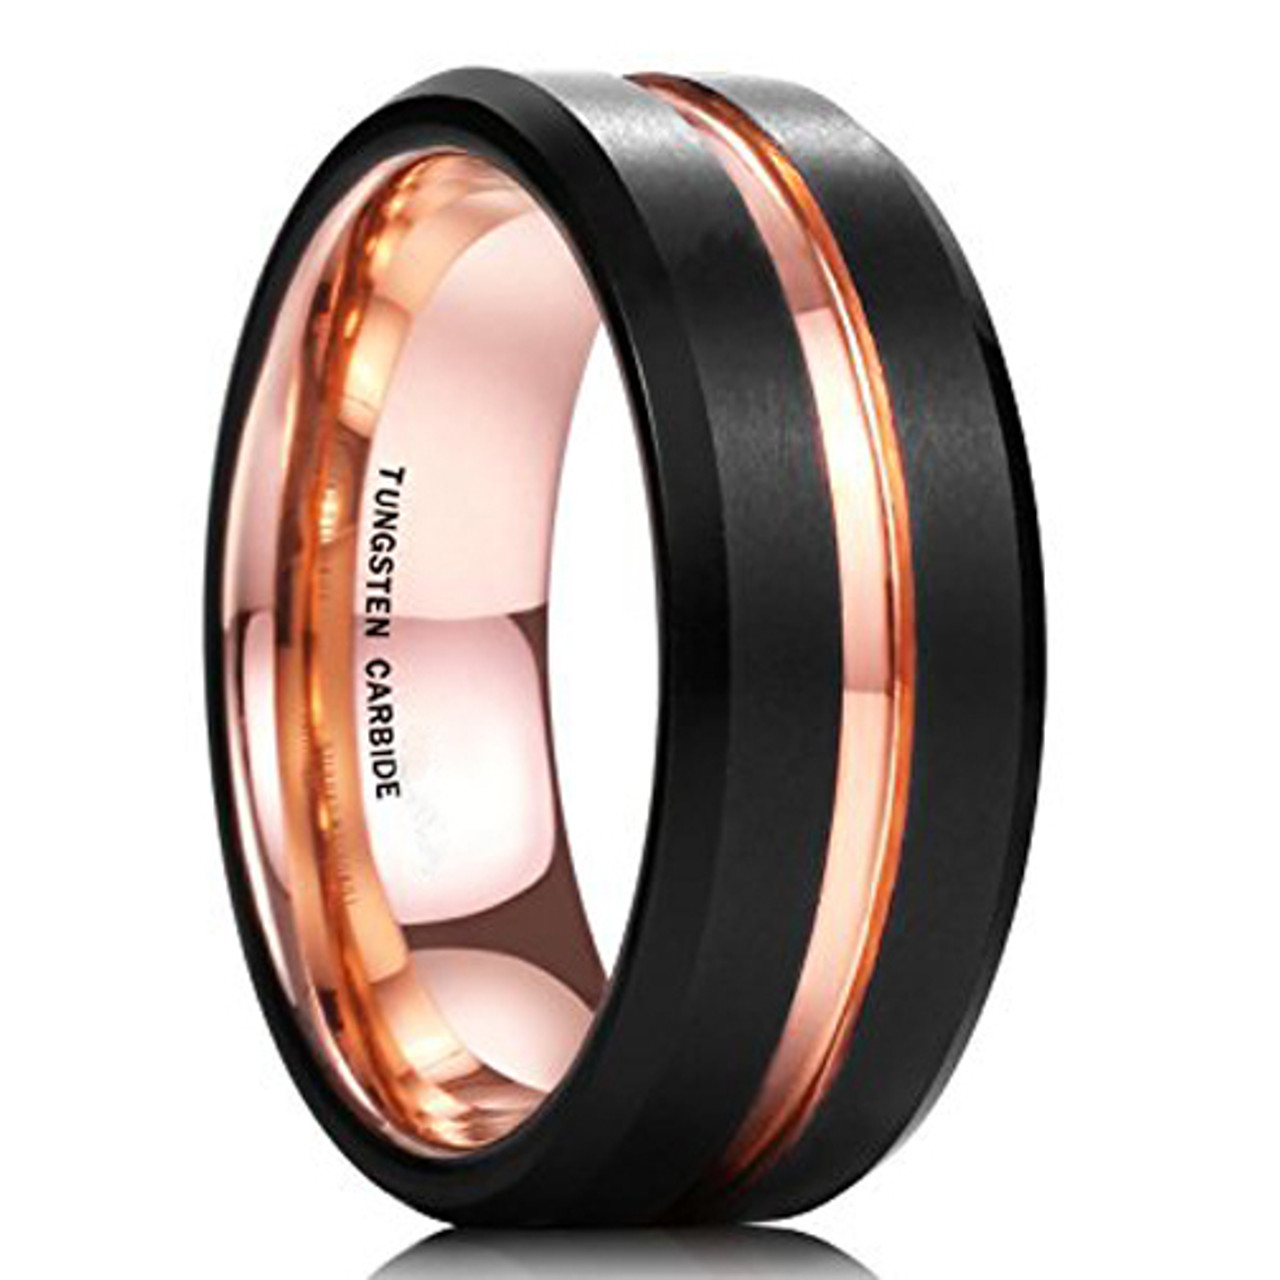 Men's Tungsten Wedding Band (8mm). Black Matte Finish Tungsten Carbide Ring with Rose Gold Beveled Edge 